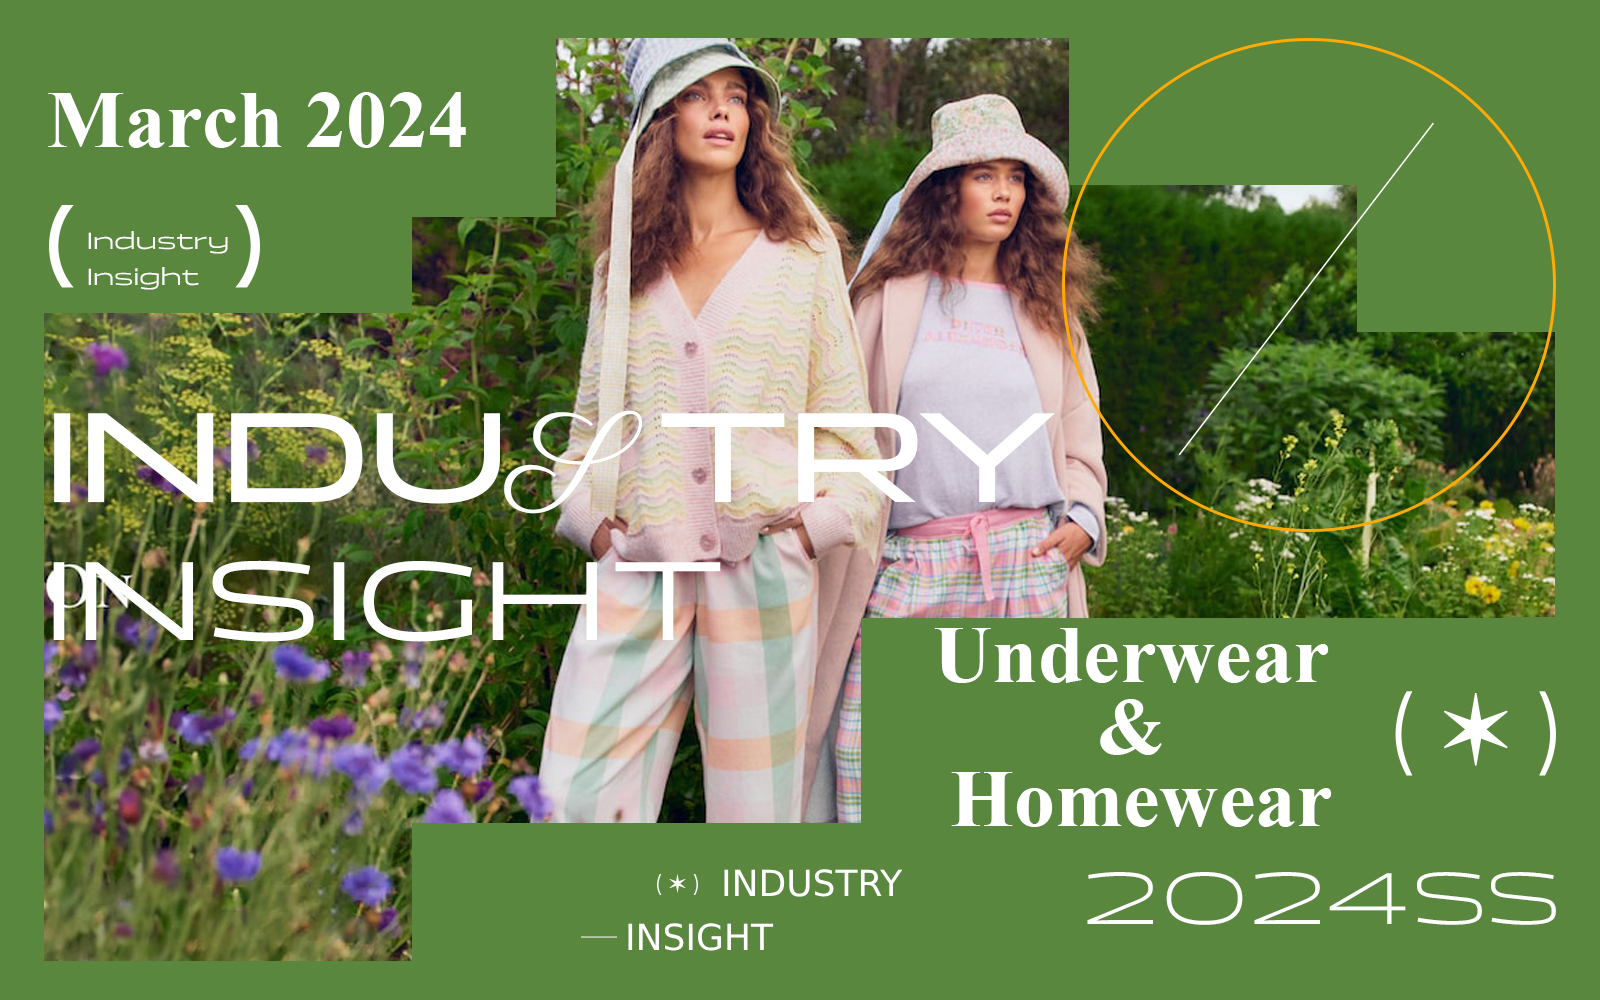 March 2024 -- The Industry Insight of Underwear & Homewear